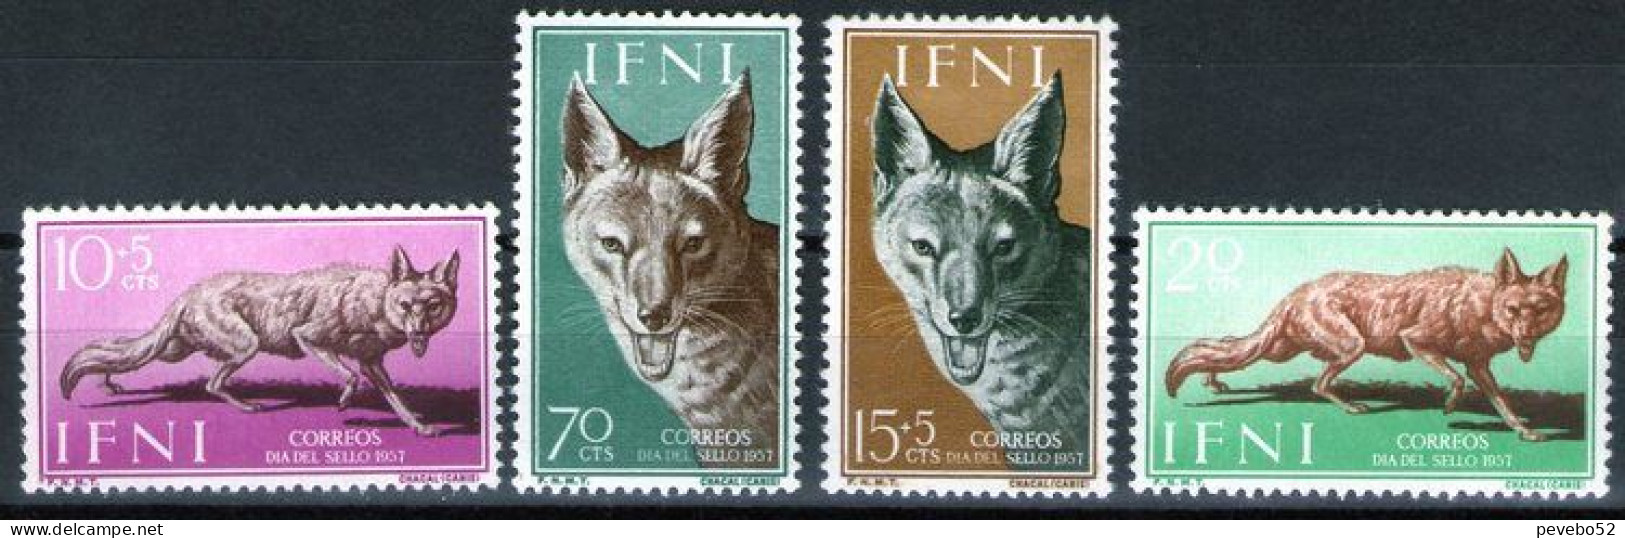 SPAINISH IFNI 1957 - Stamp Day - Golden Jackal MNH - Ifni